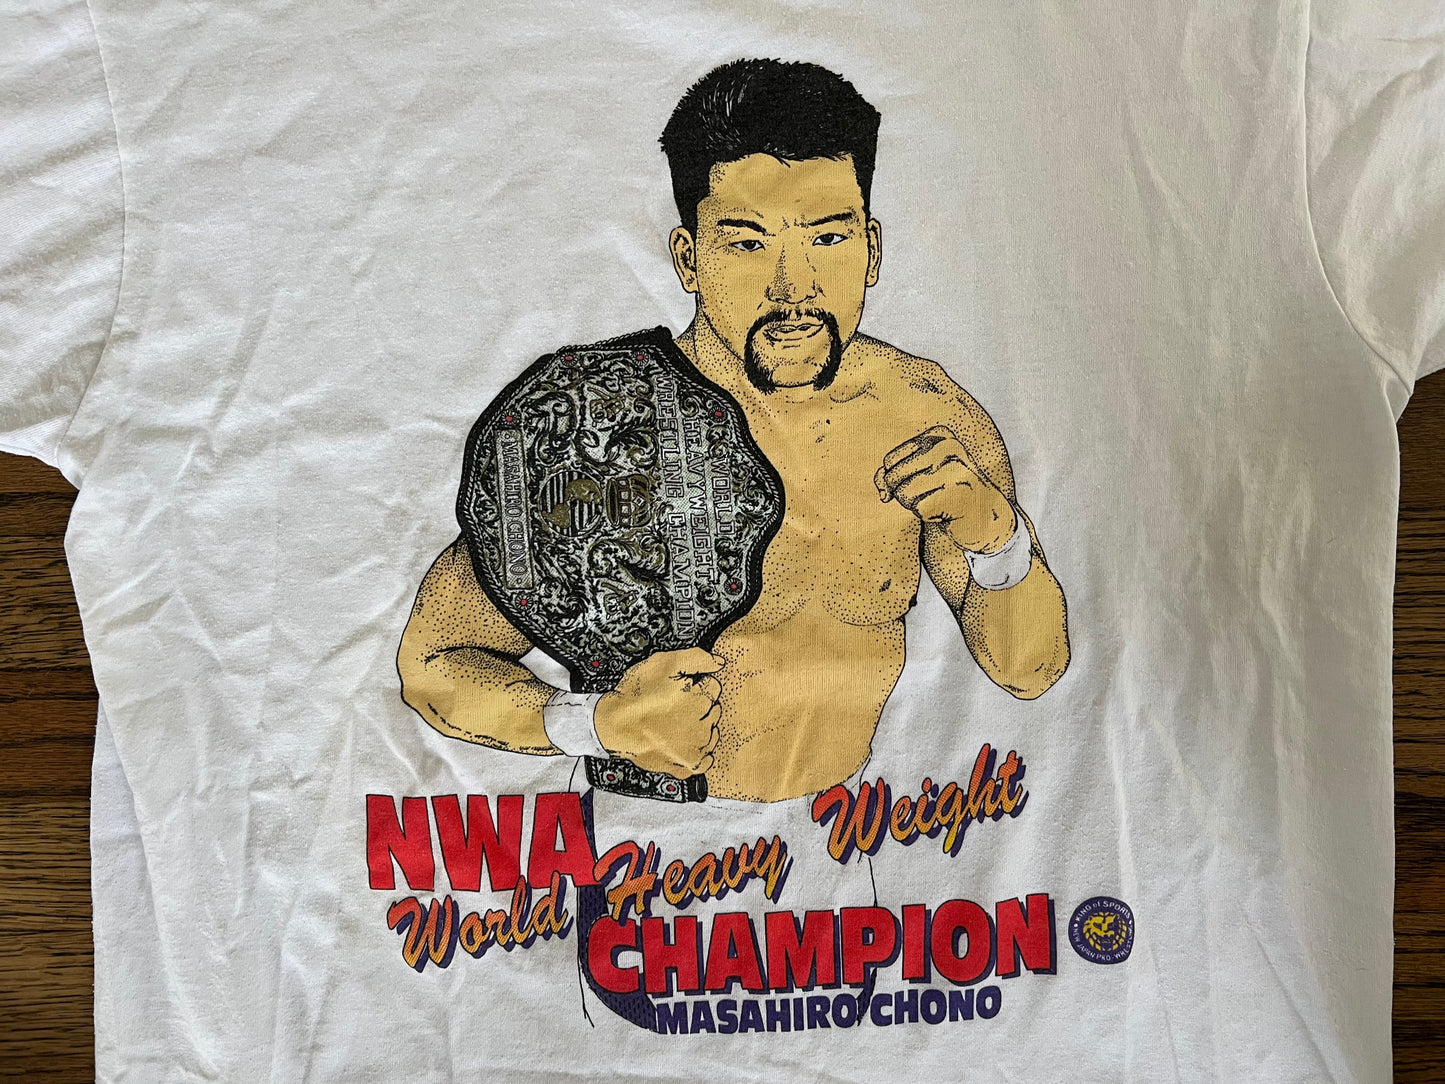 1992 NJPW Masahiro Chono NWA World Heavyweight Champion signed on the back (1993 signature)